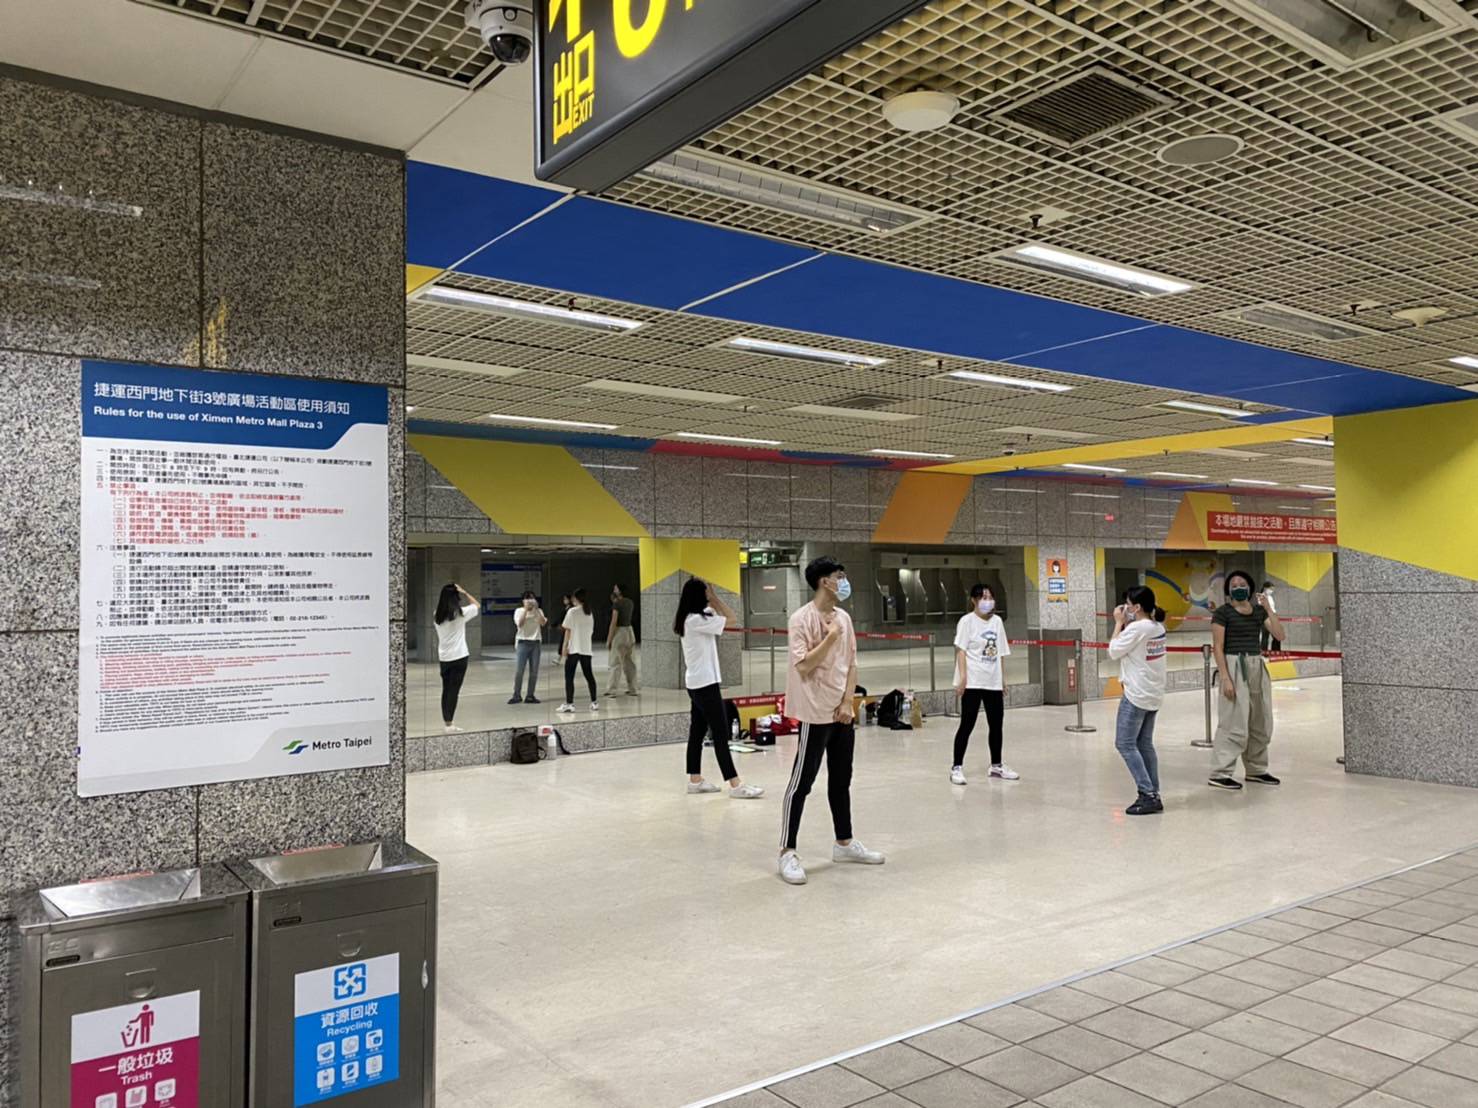 MRT underground street dancing area opened. (Photo / Provided by the Taipei Metro)